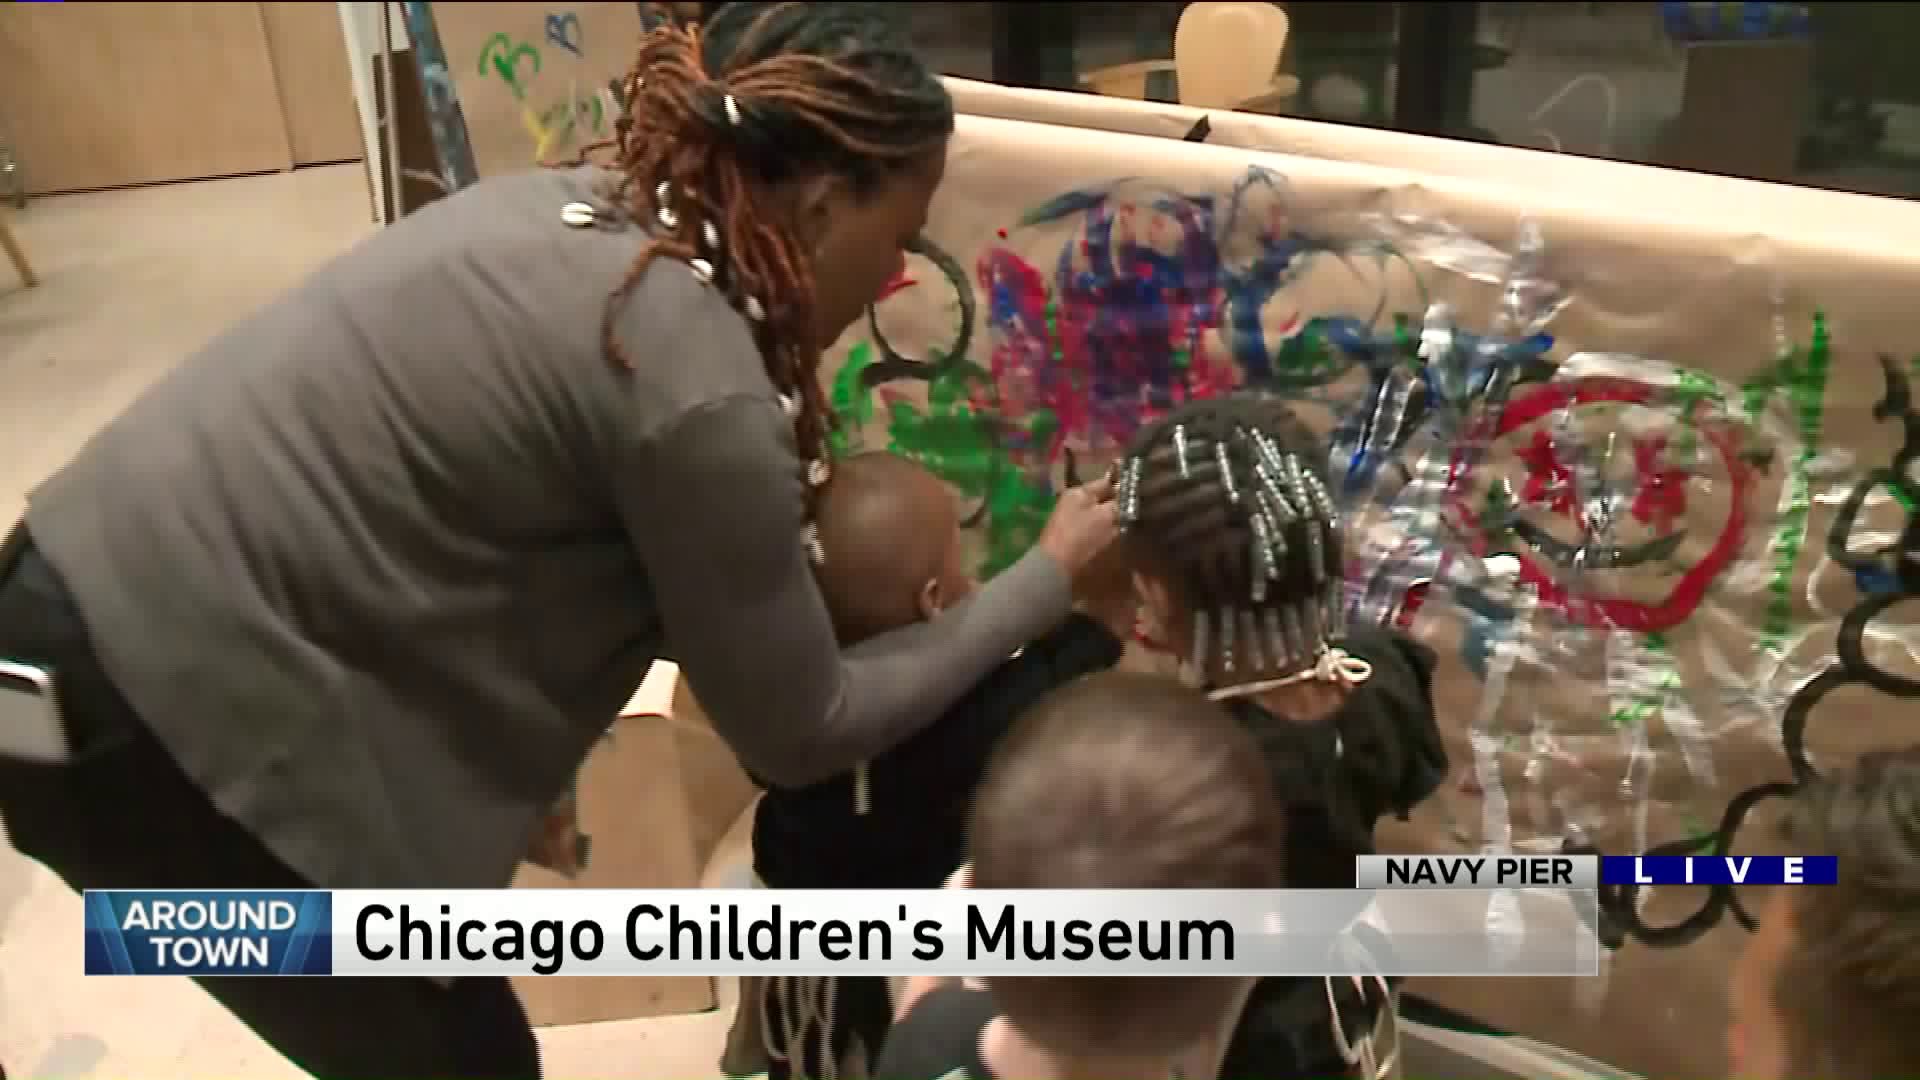 Around Town explores the new Art Studio at the Chicago Children’s Museum